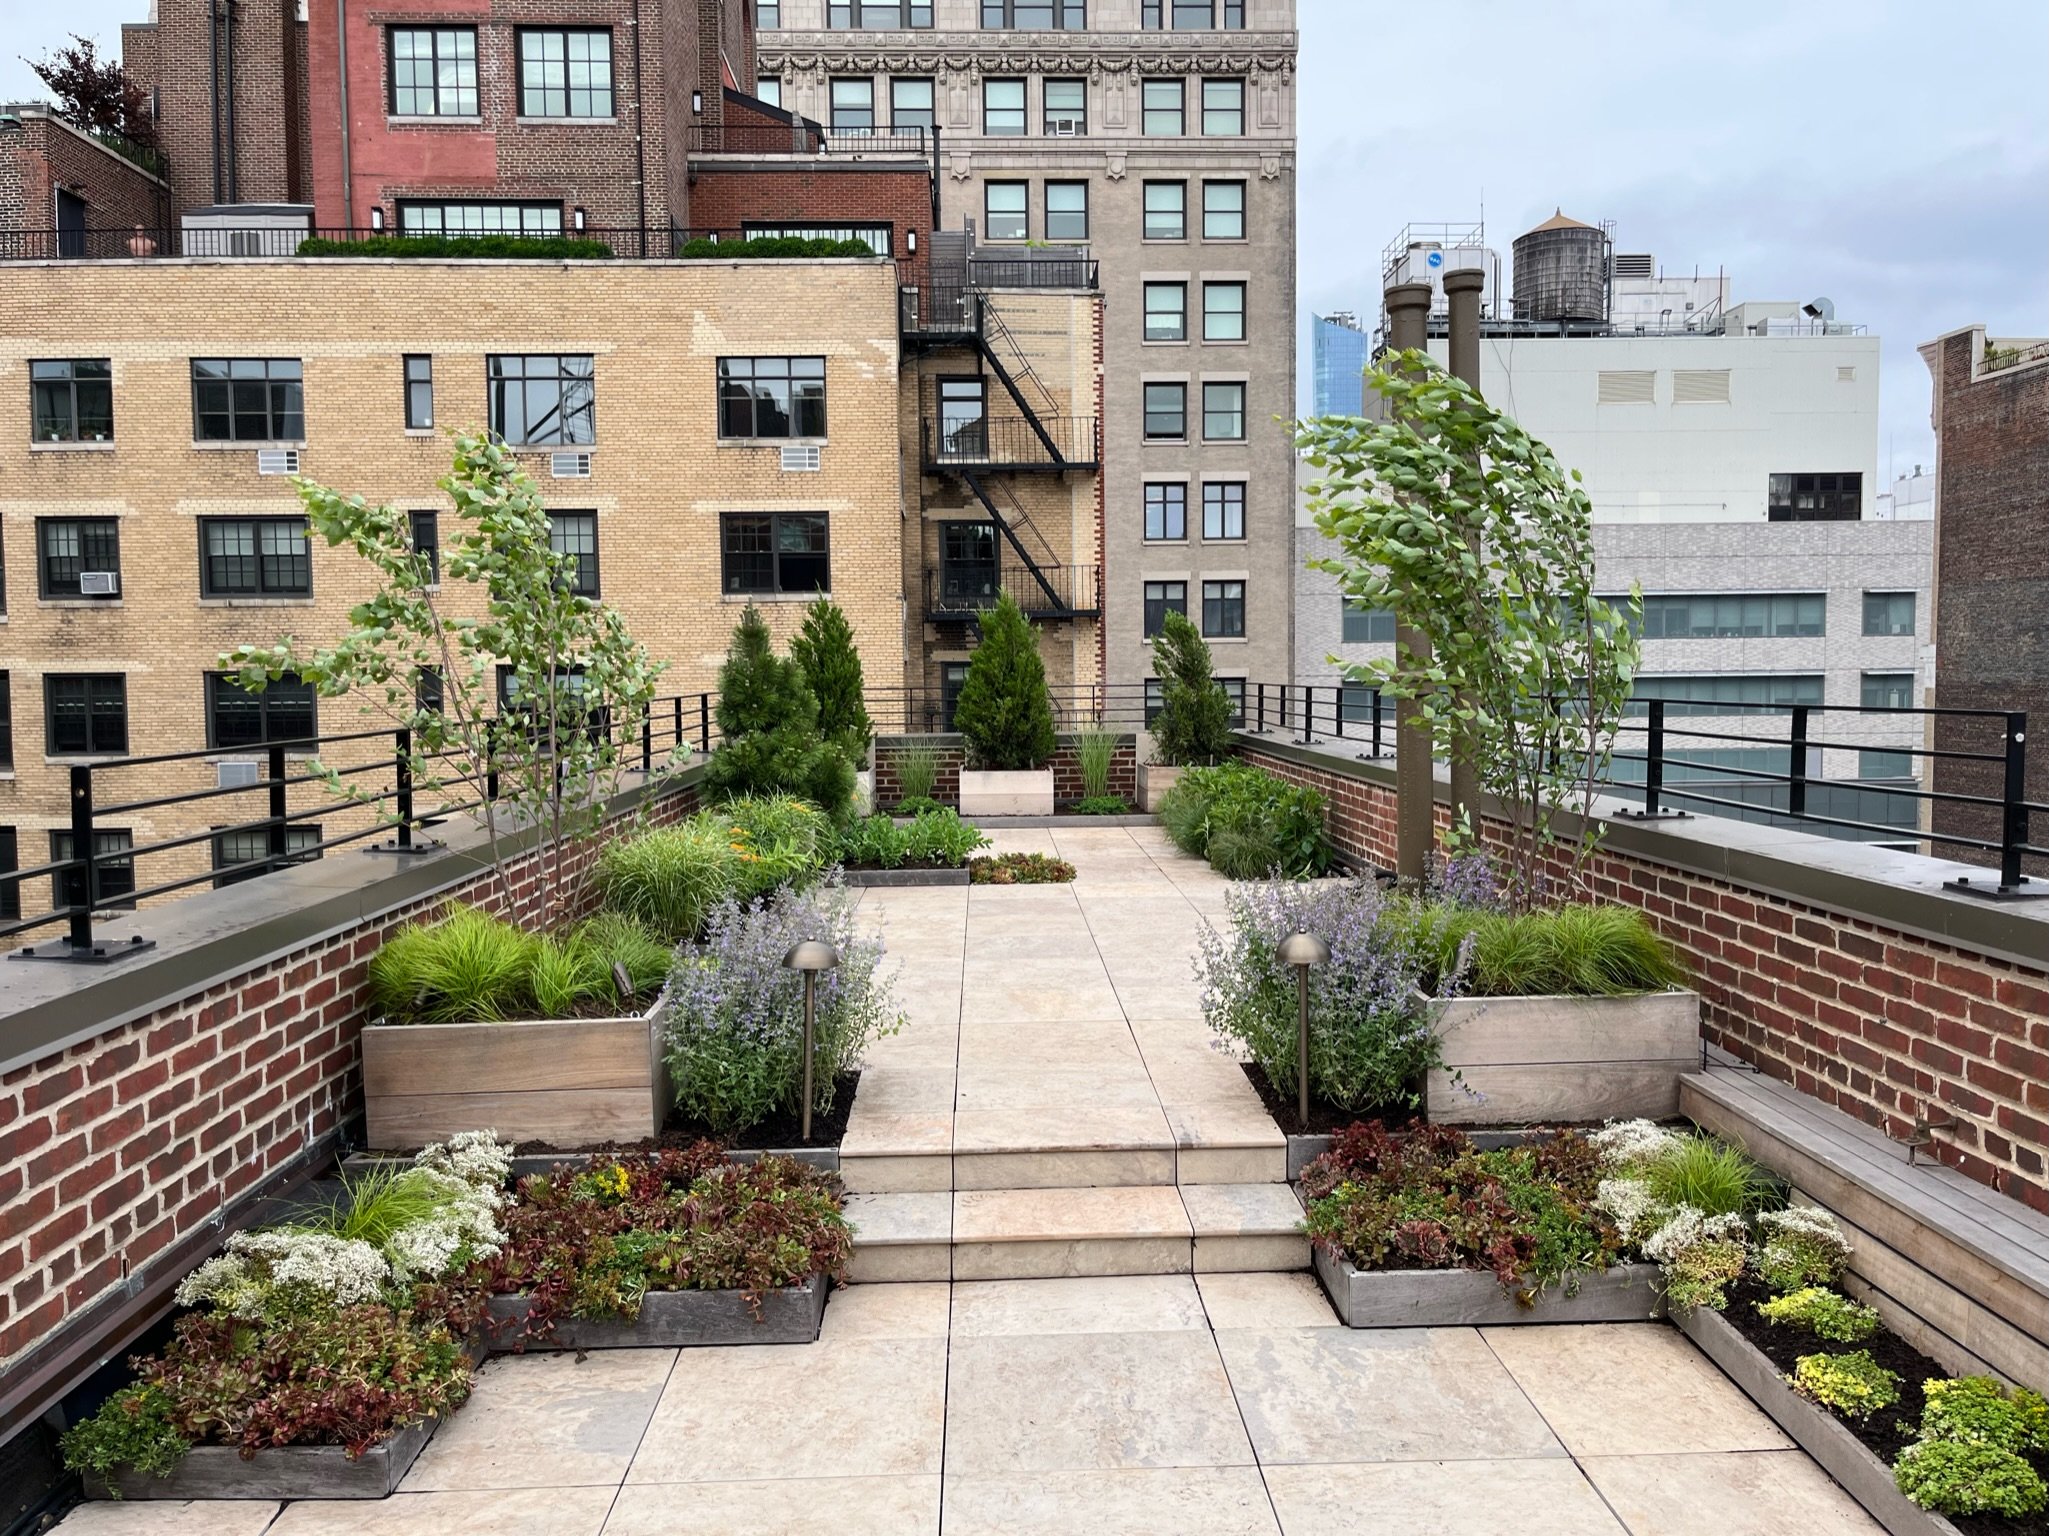 CSP nyc rooftop terrace garden luxury outdoor space high end custom planters paving installation maintenance.jpg